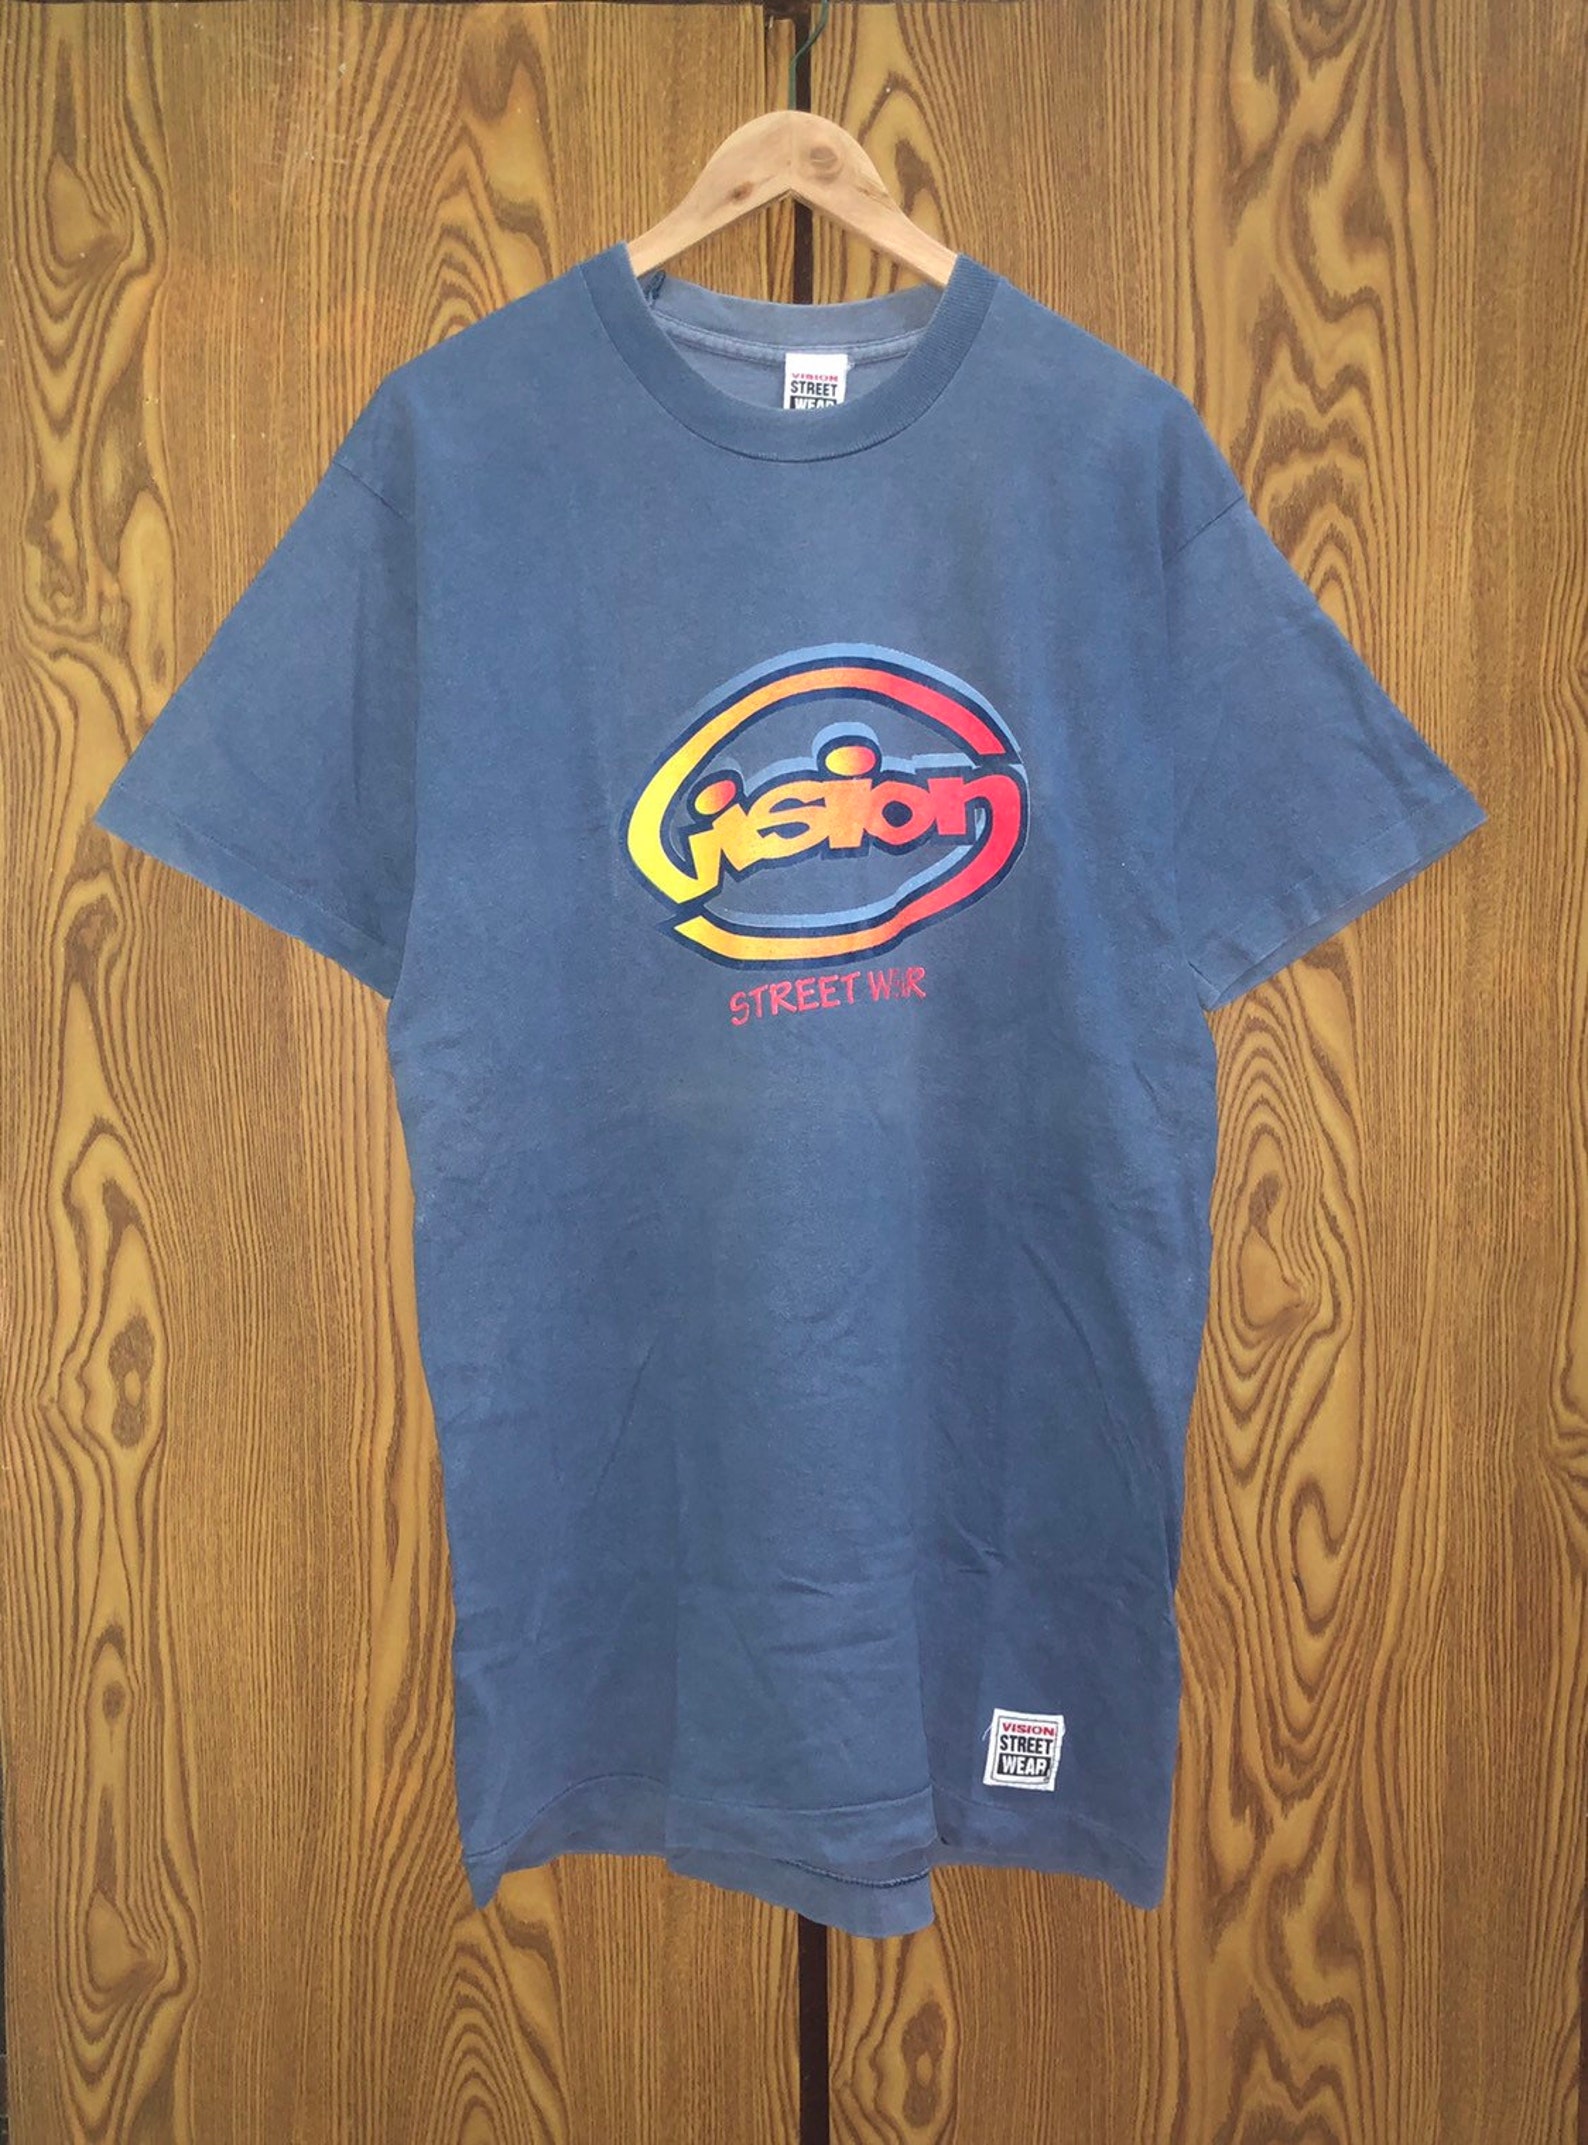 Rare Vintage 90s Vision Street wear Skateboard Tshirts | Etsy